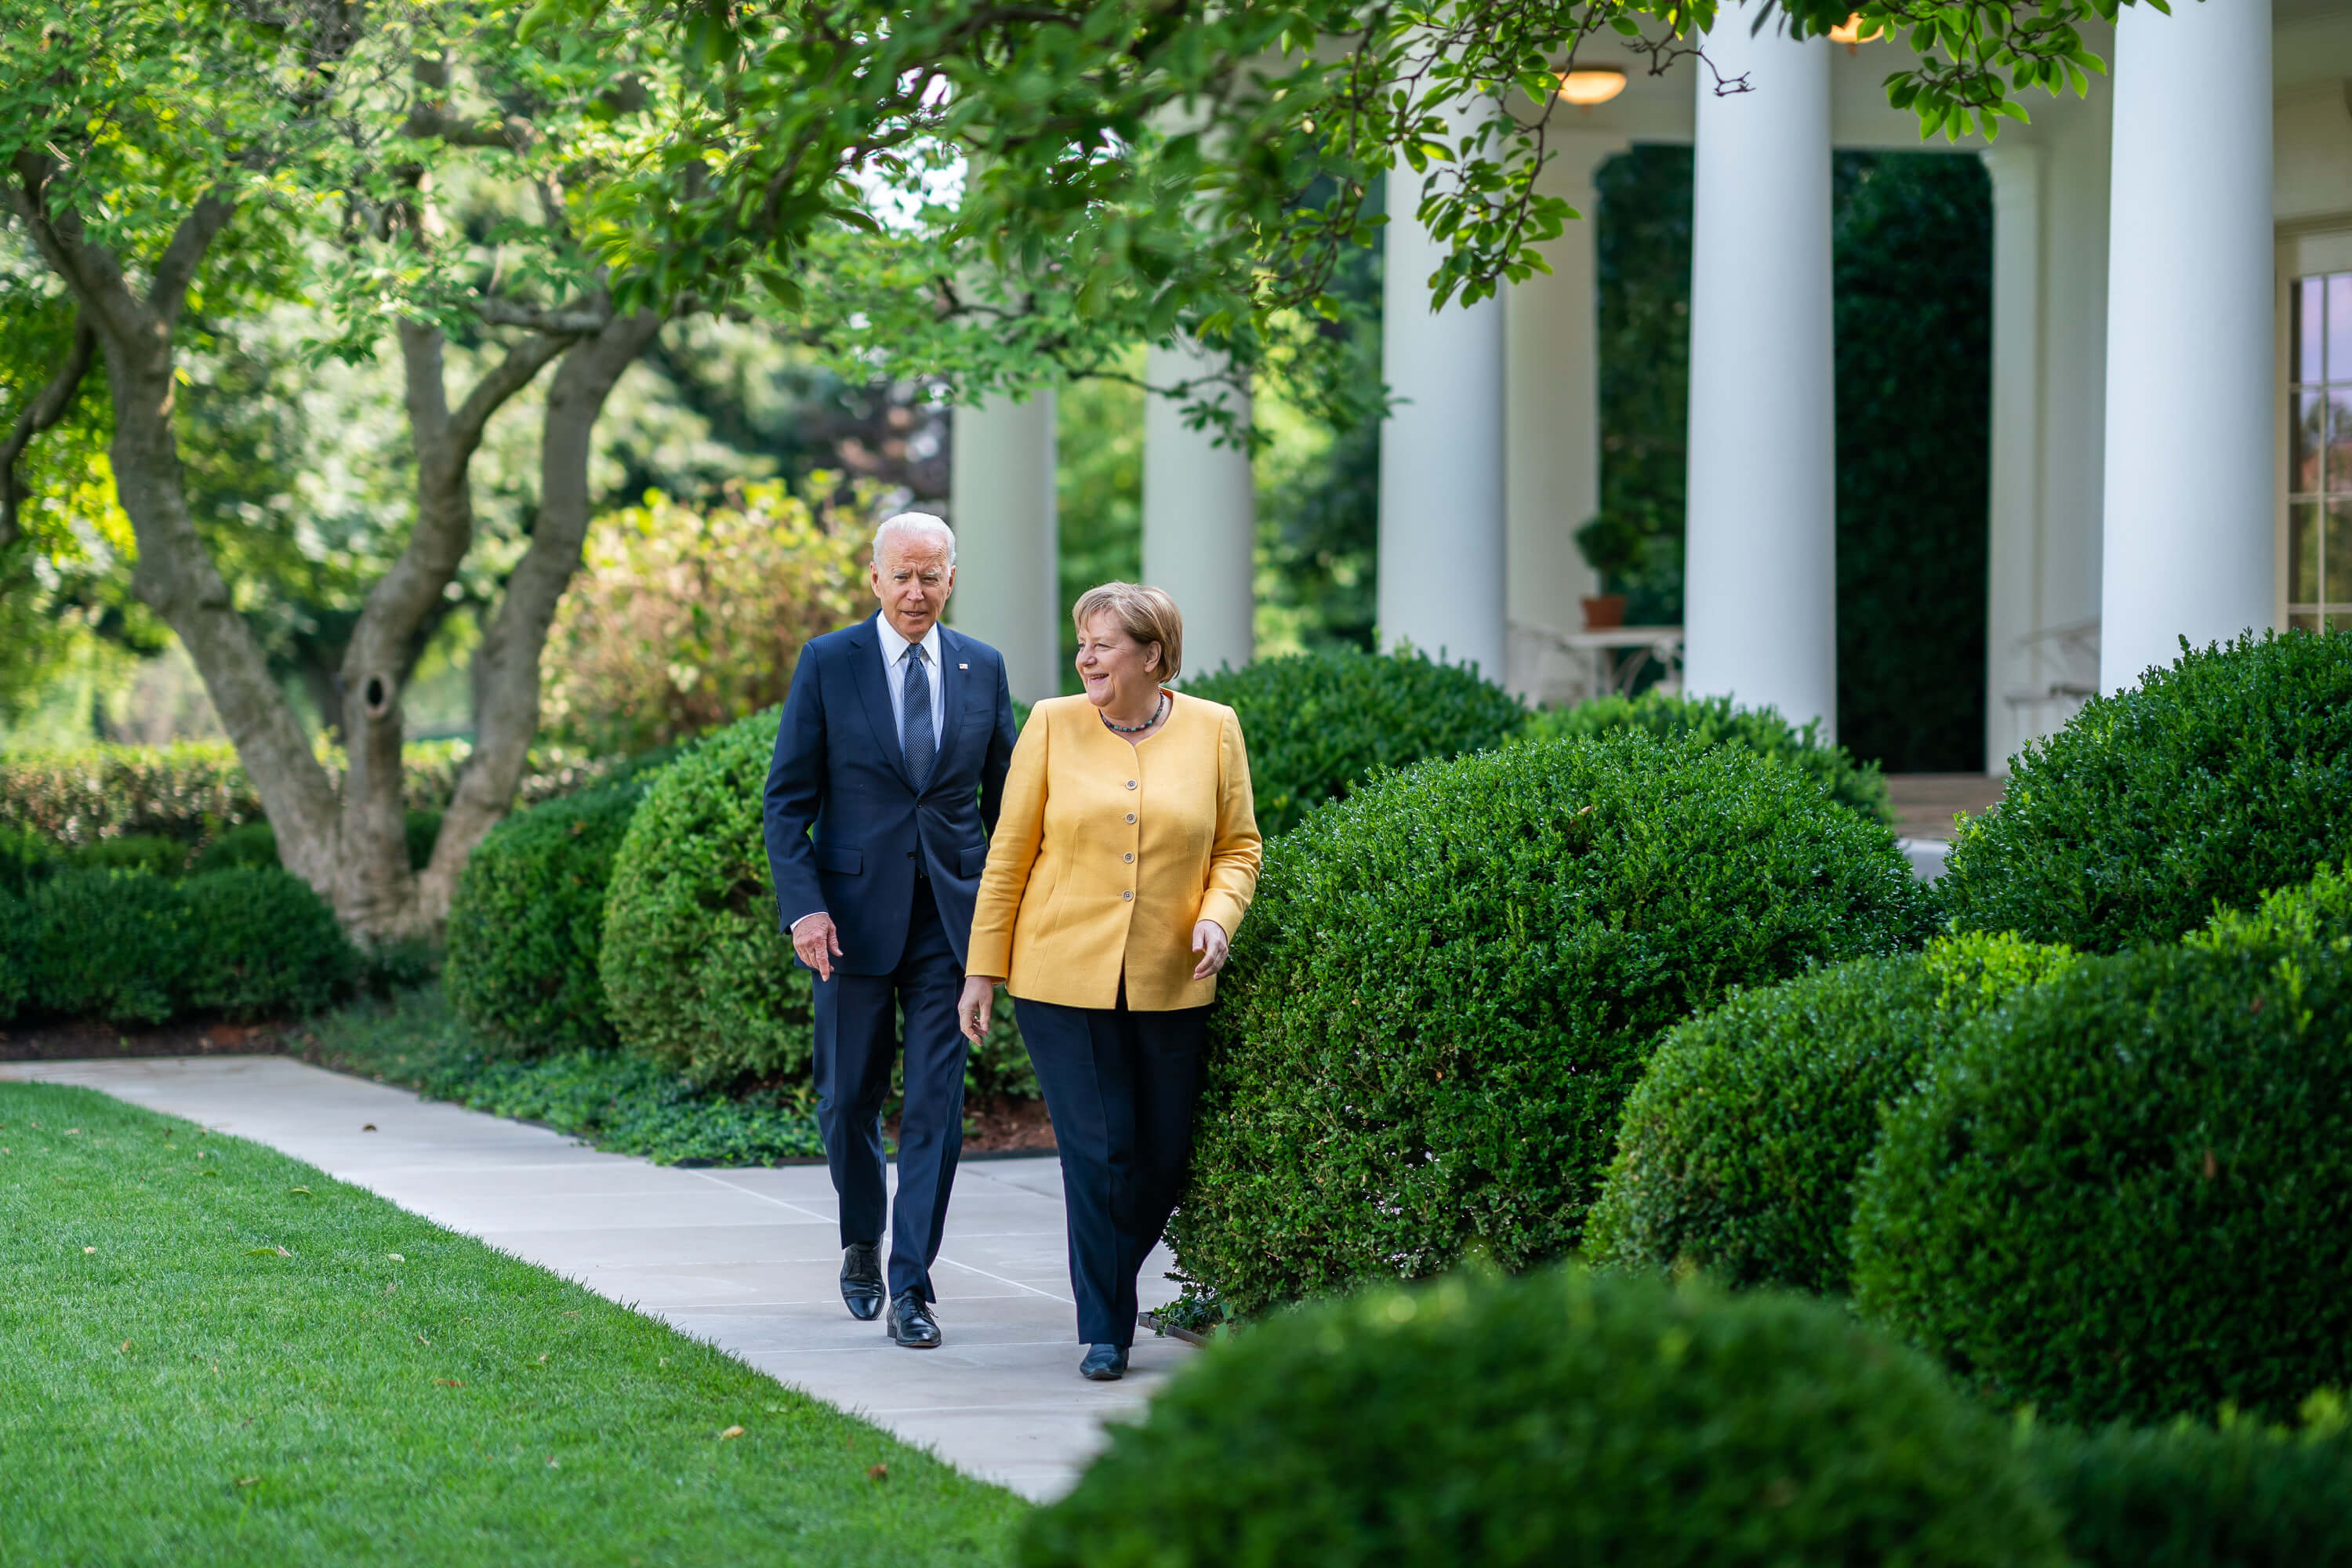 Jones - President Joe Biden and German Chancellor Angela Merkel walk through the Rose Garden of the White House on Thursday, July 15, 2021. Official White House Photo by Adam Schultz via Sipa USA